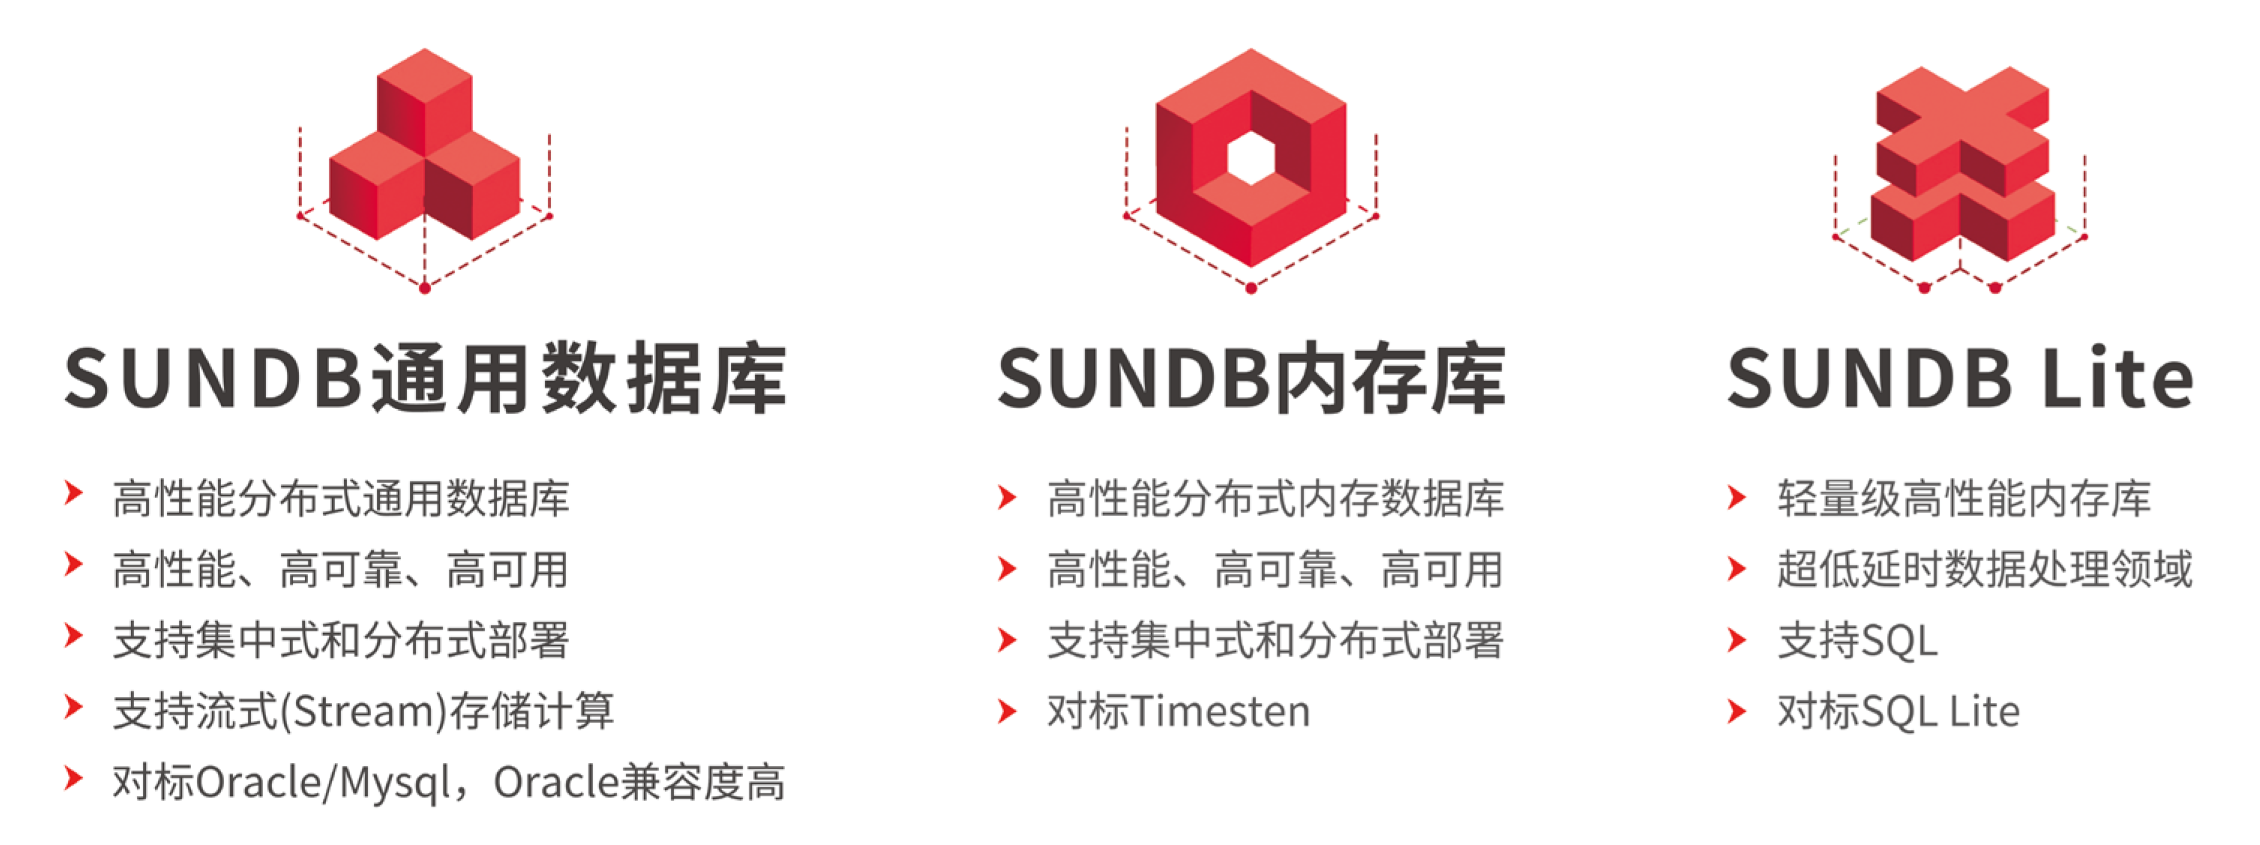 SUNDB产品线.png